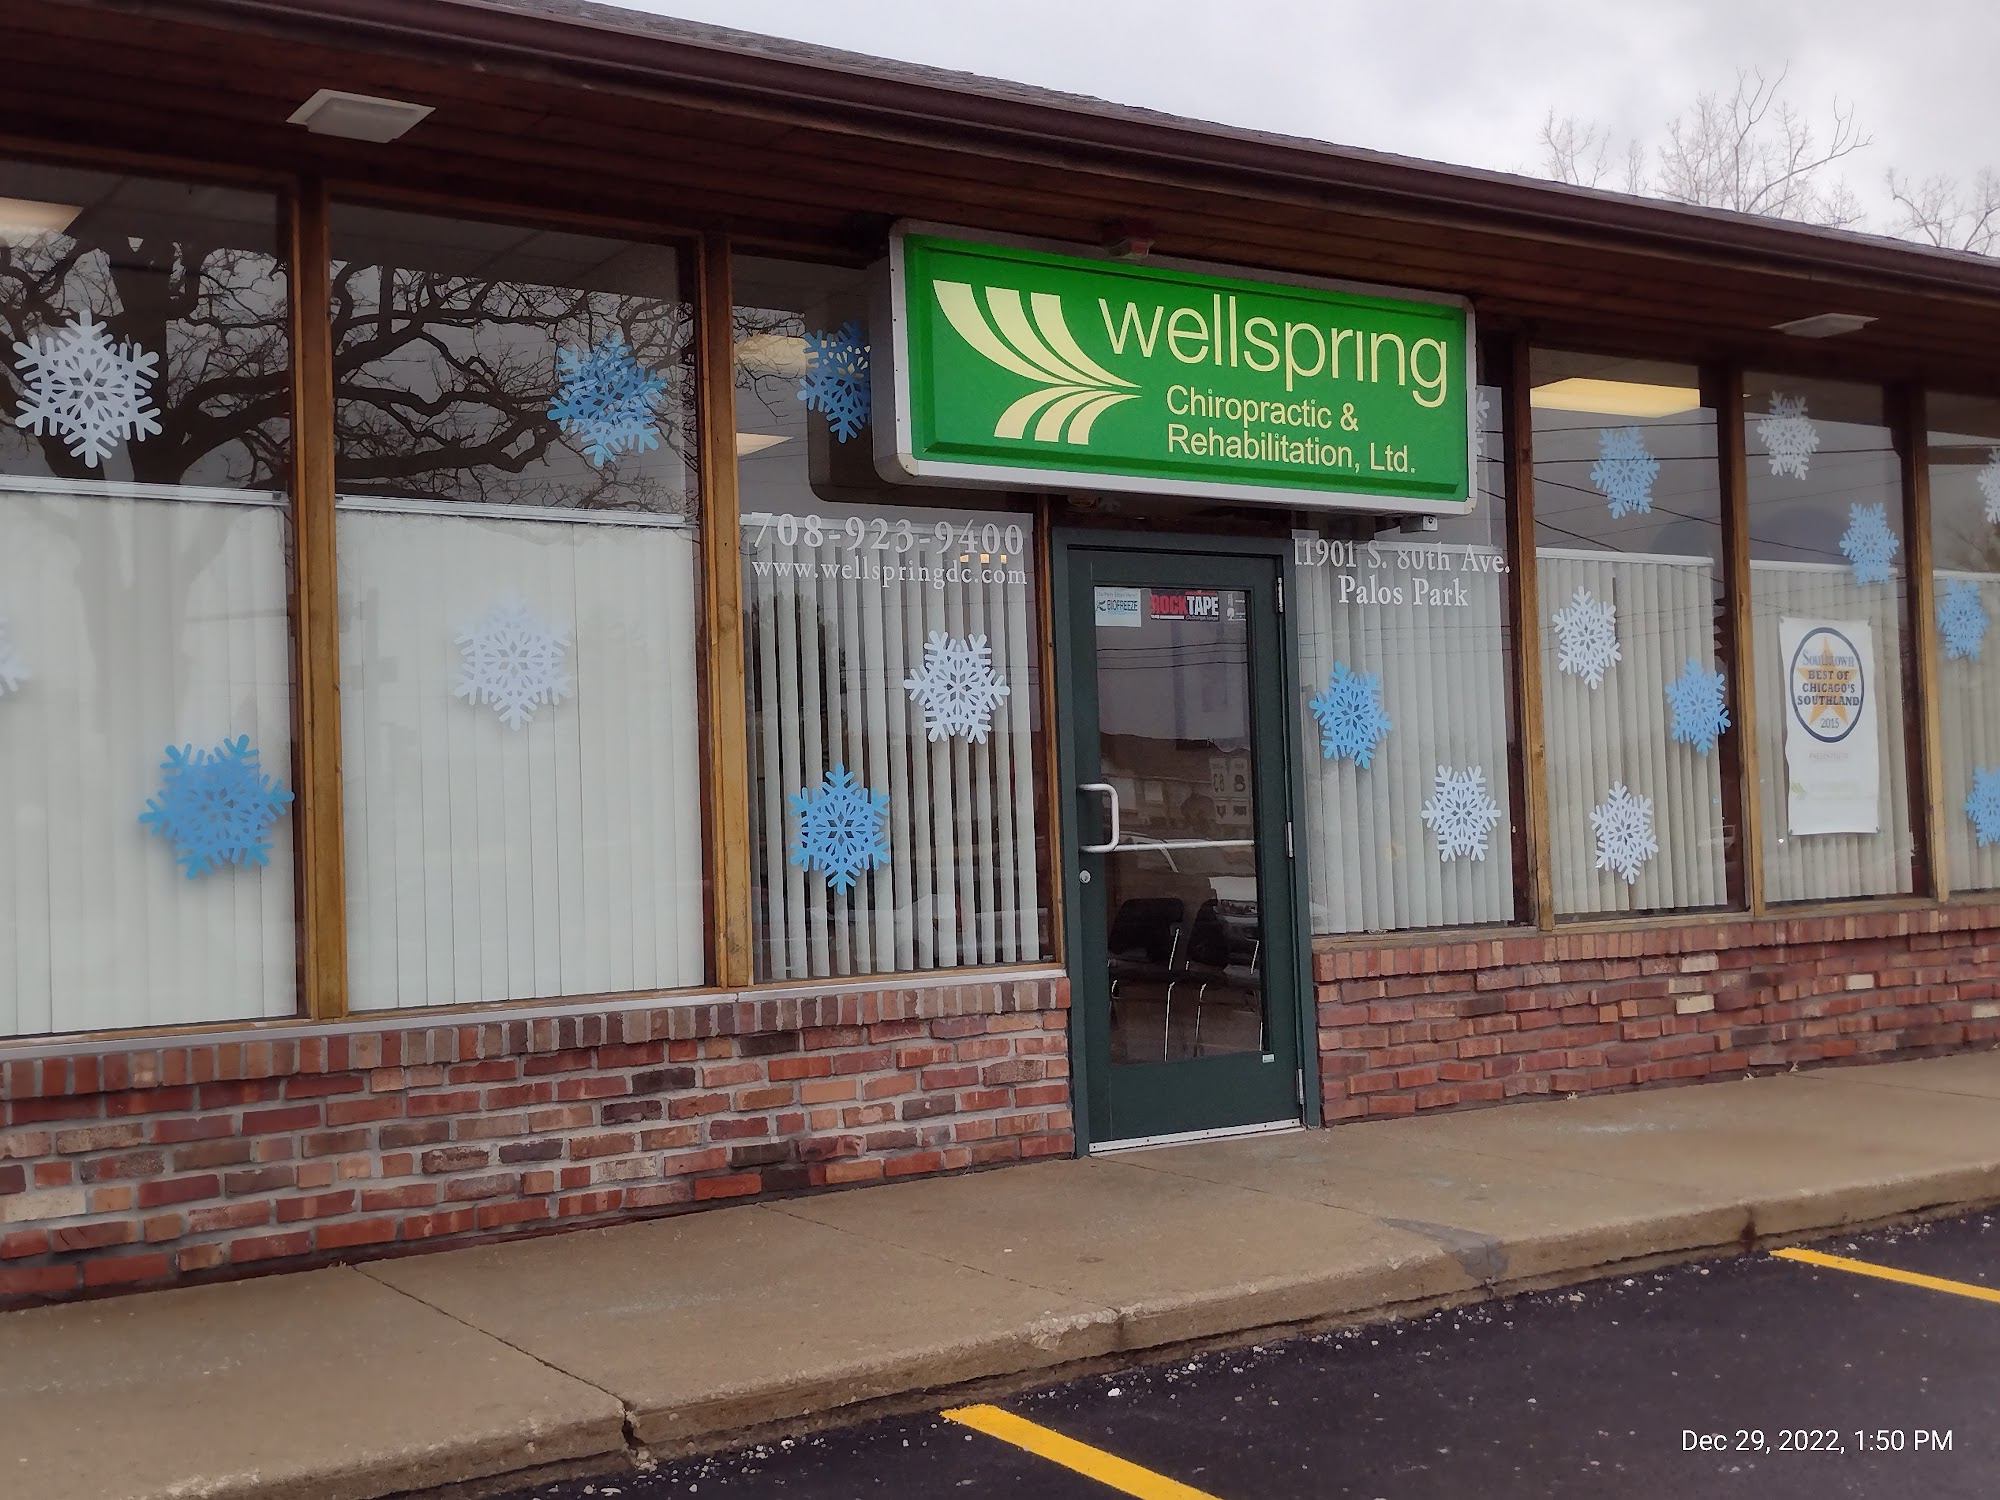 Wellspring Chiropractic & Rehabilitation, Ltd. 11901 S 80th Ave, Palos Park Illinois 60464